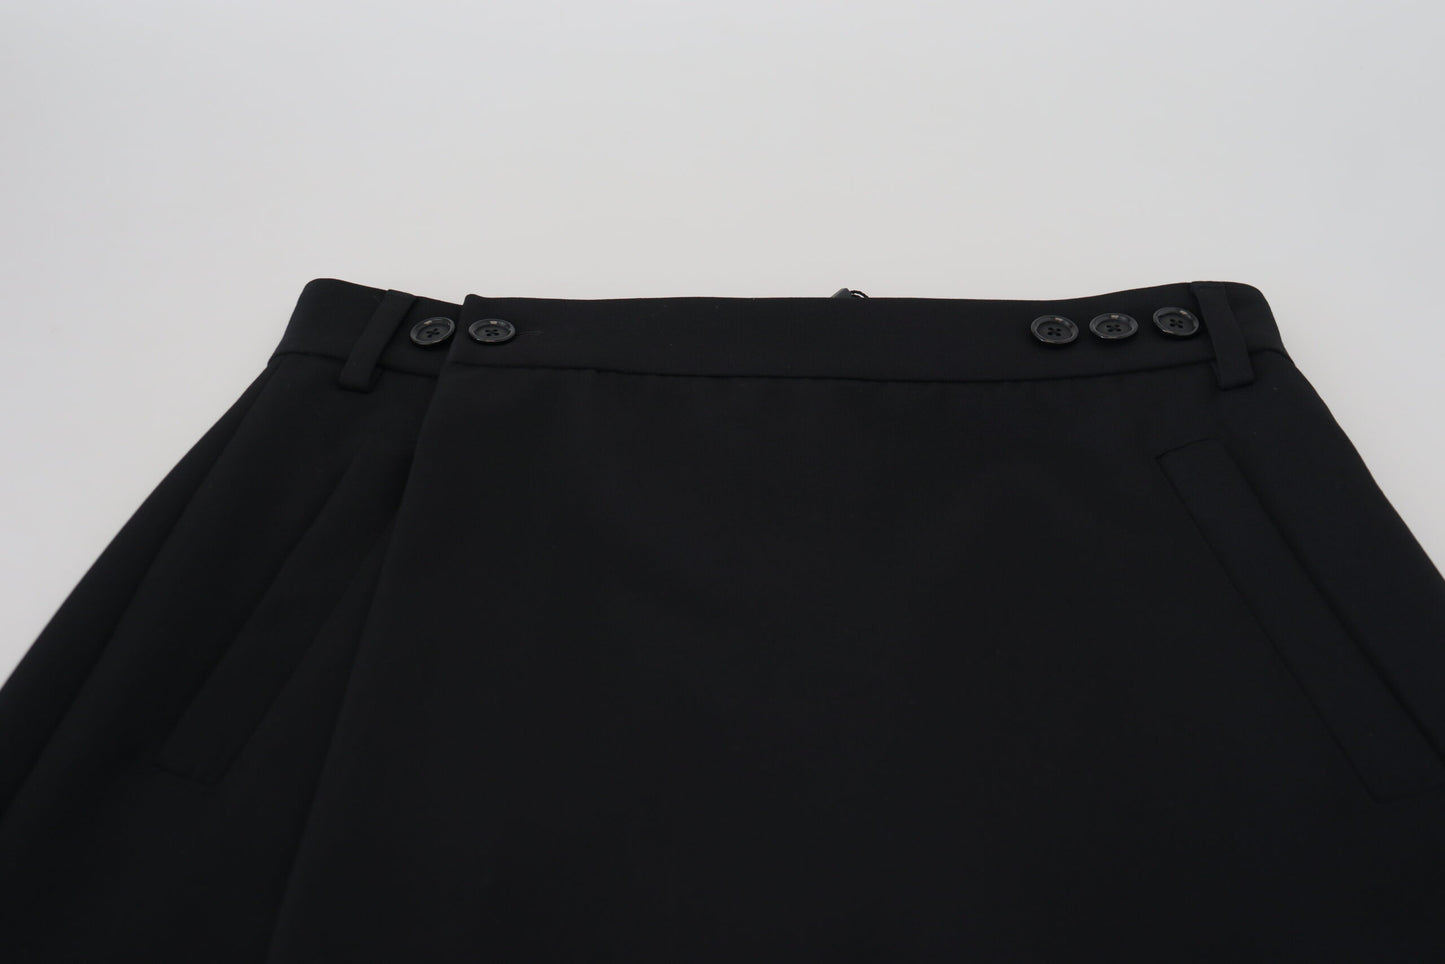 Elegant High Waist A-Line Mini Skirt